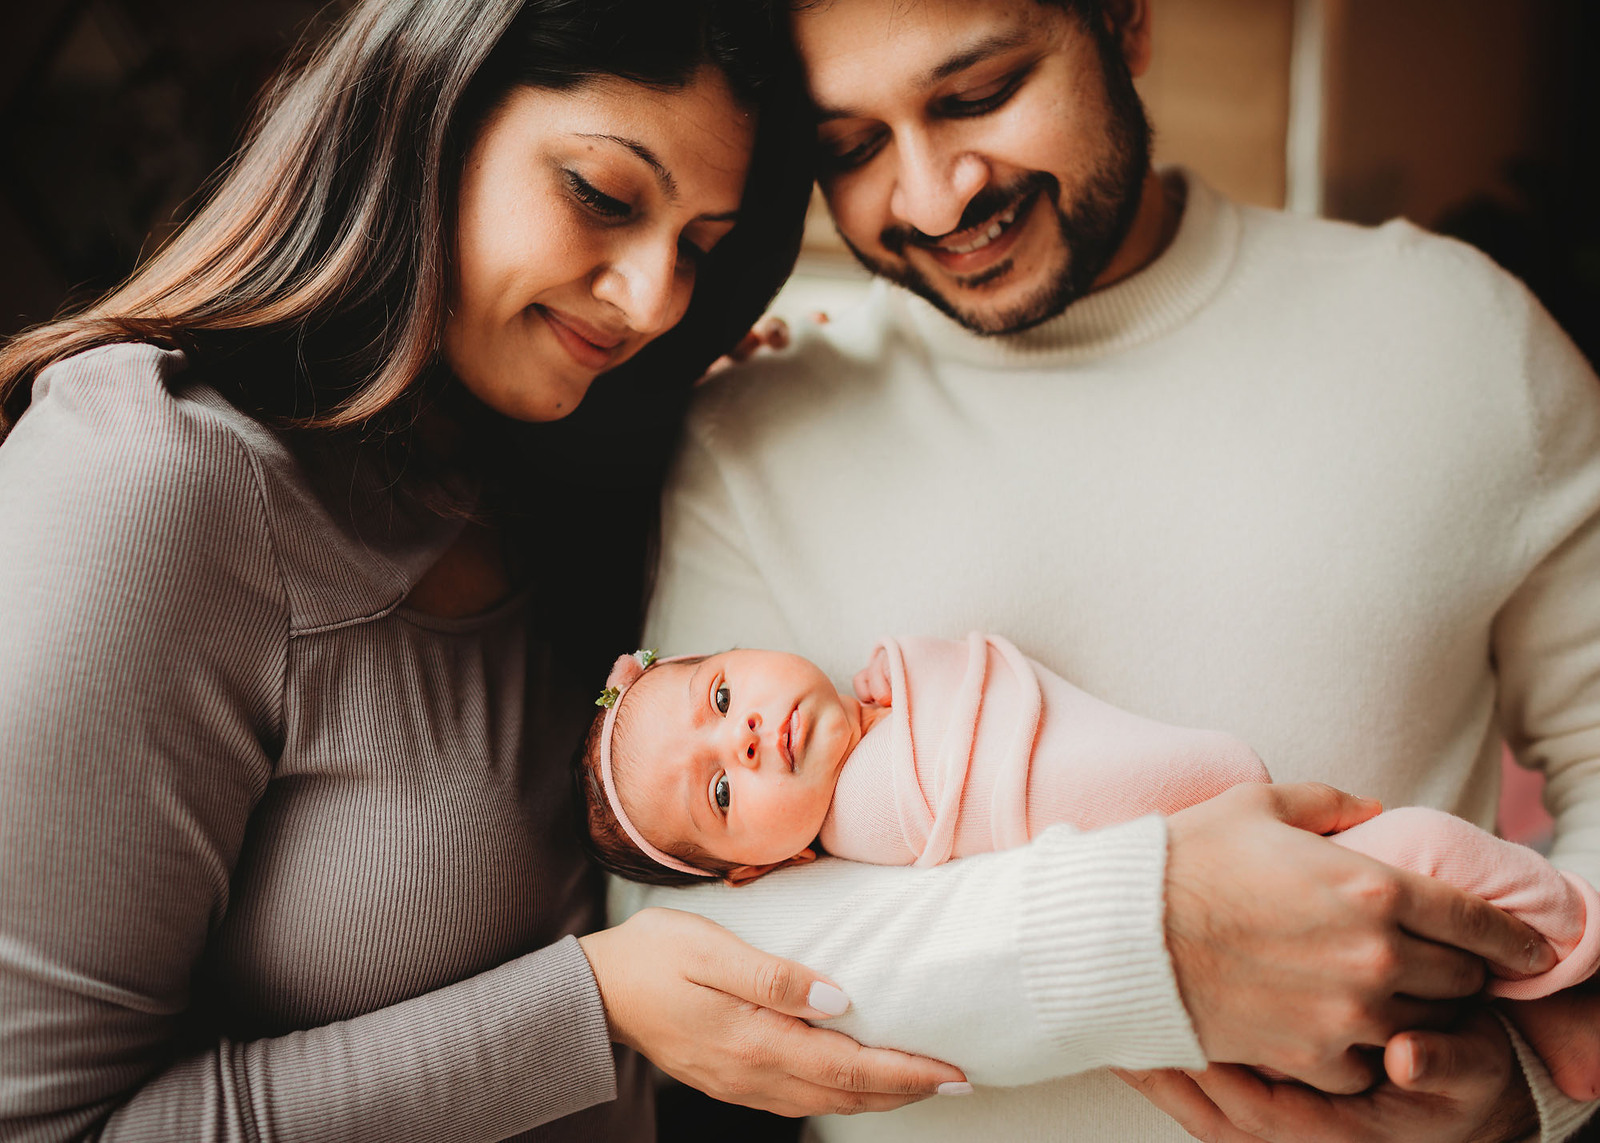 newborn family photography